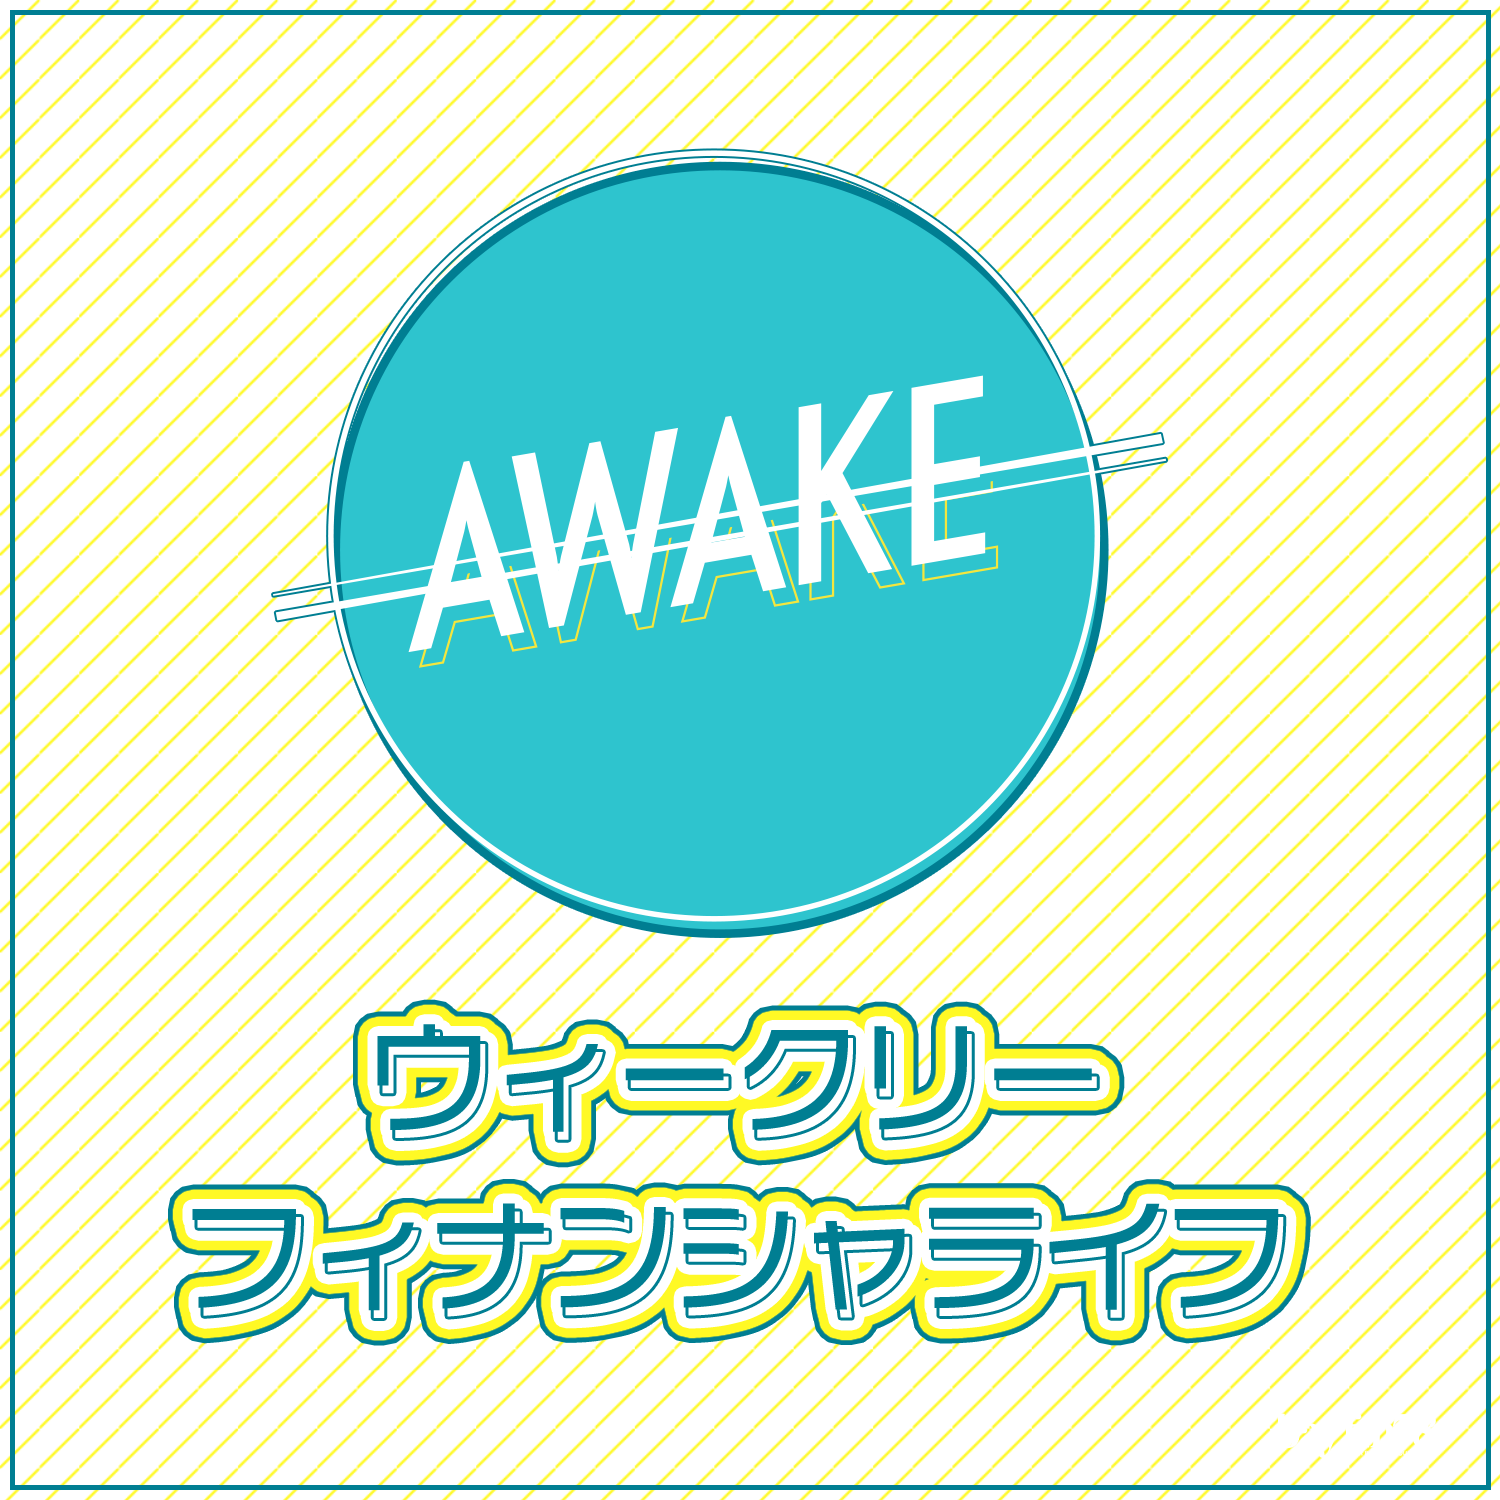 AWAKE ウィークリー・フィナンシャ・ライフ 第120回(2/22)